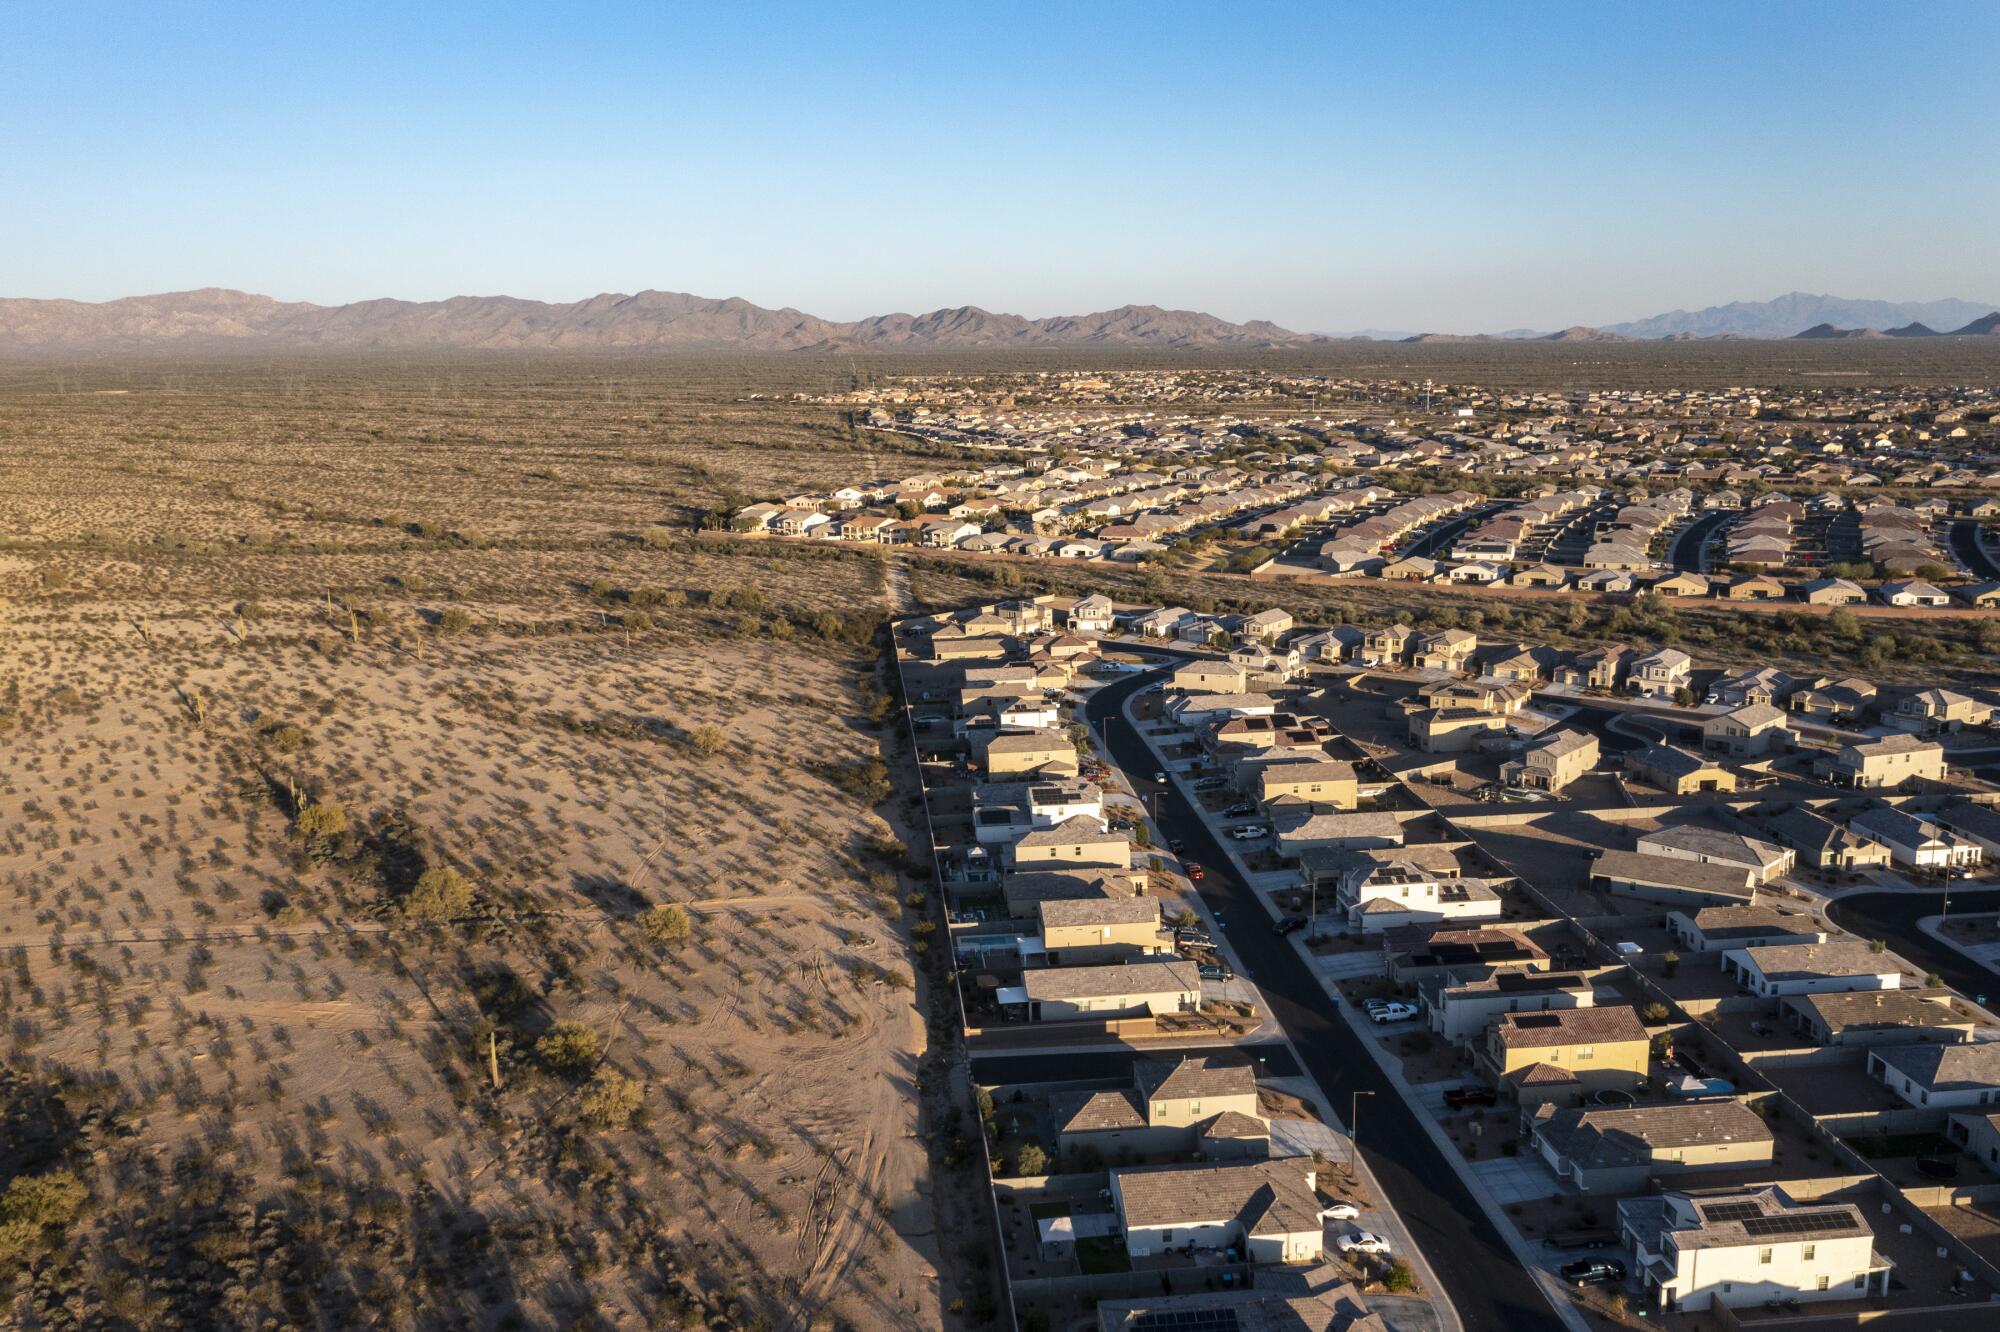 Homes, some with backyard swimming pools, where the suburbs meet the desert in Buckeye, Ariz.